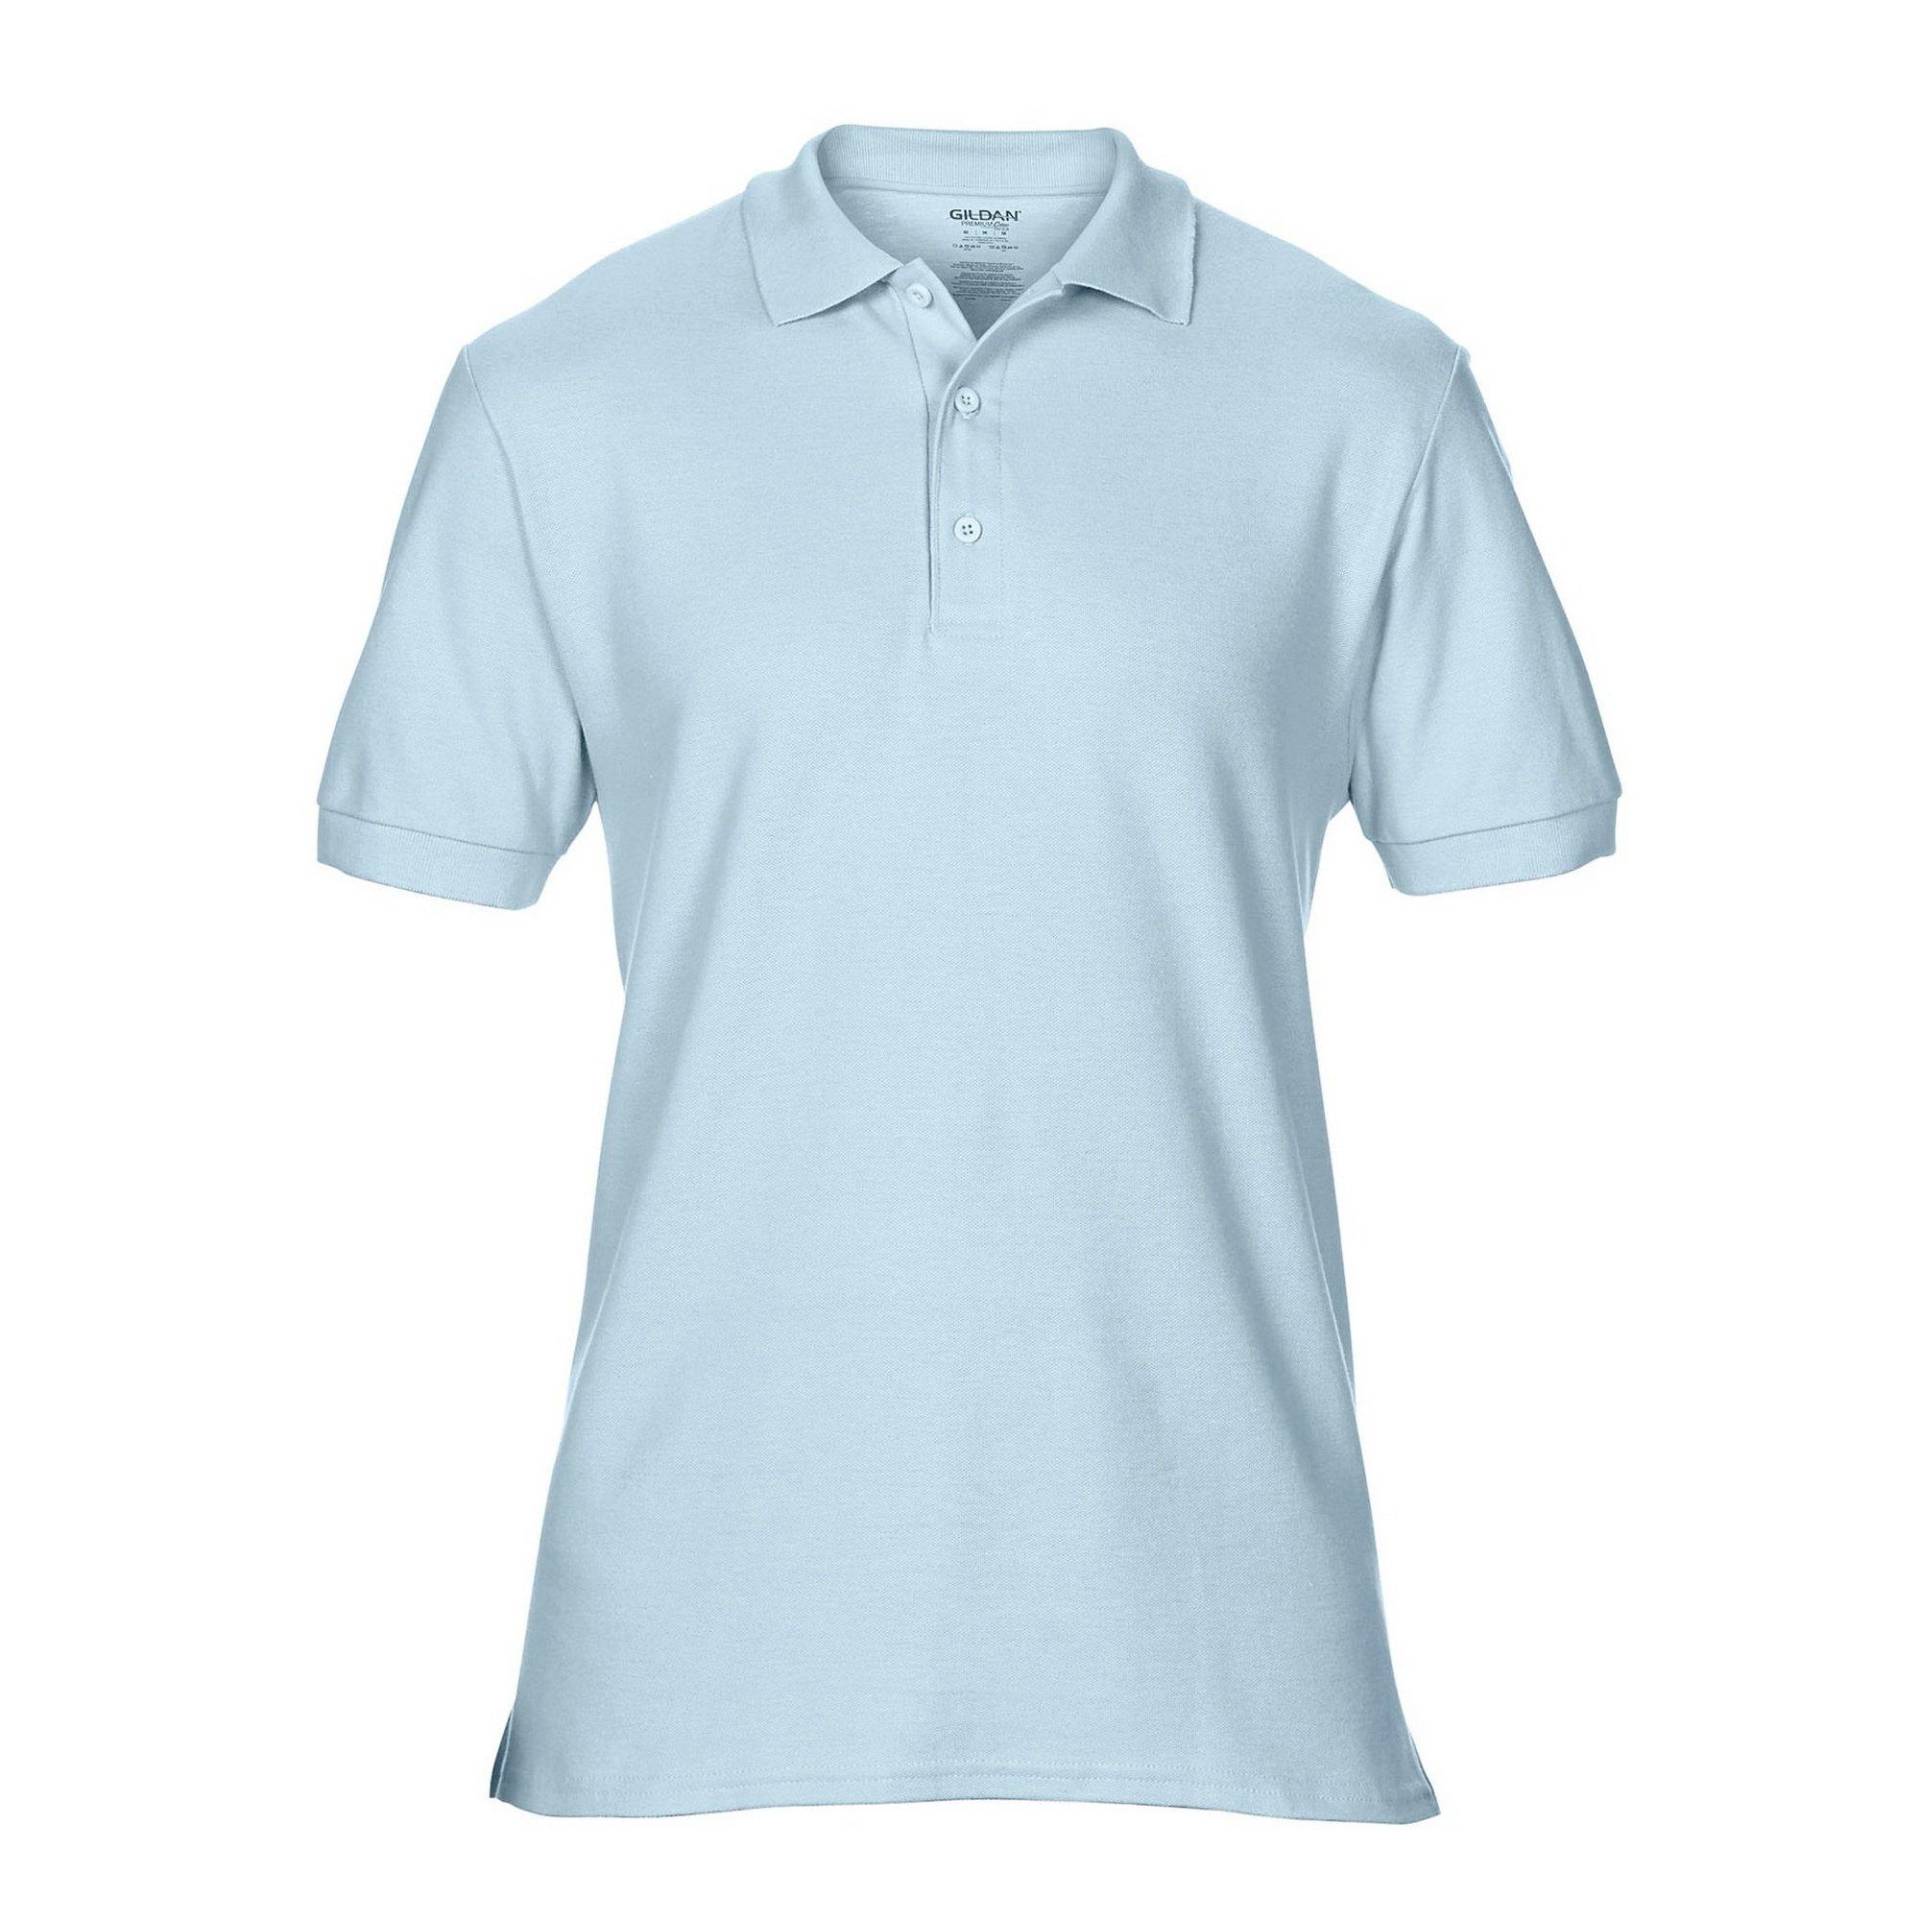 Premium Sport Pique Polohemd Herren Blau S von Gildan